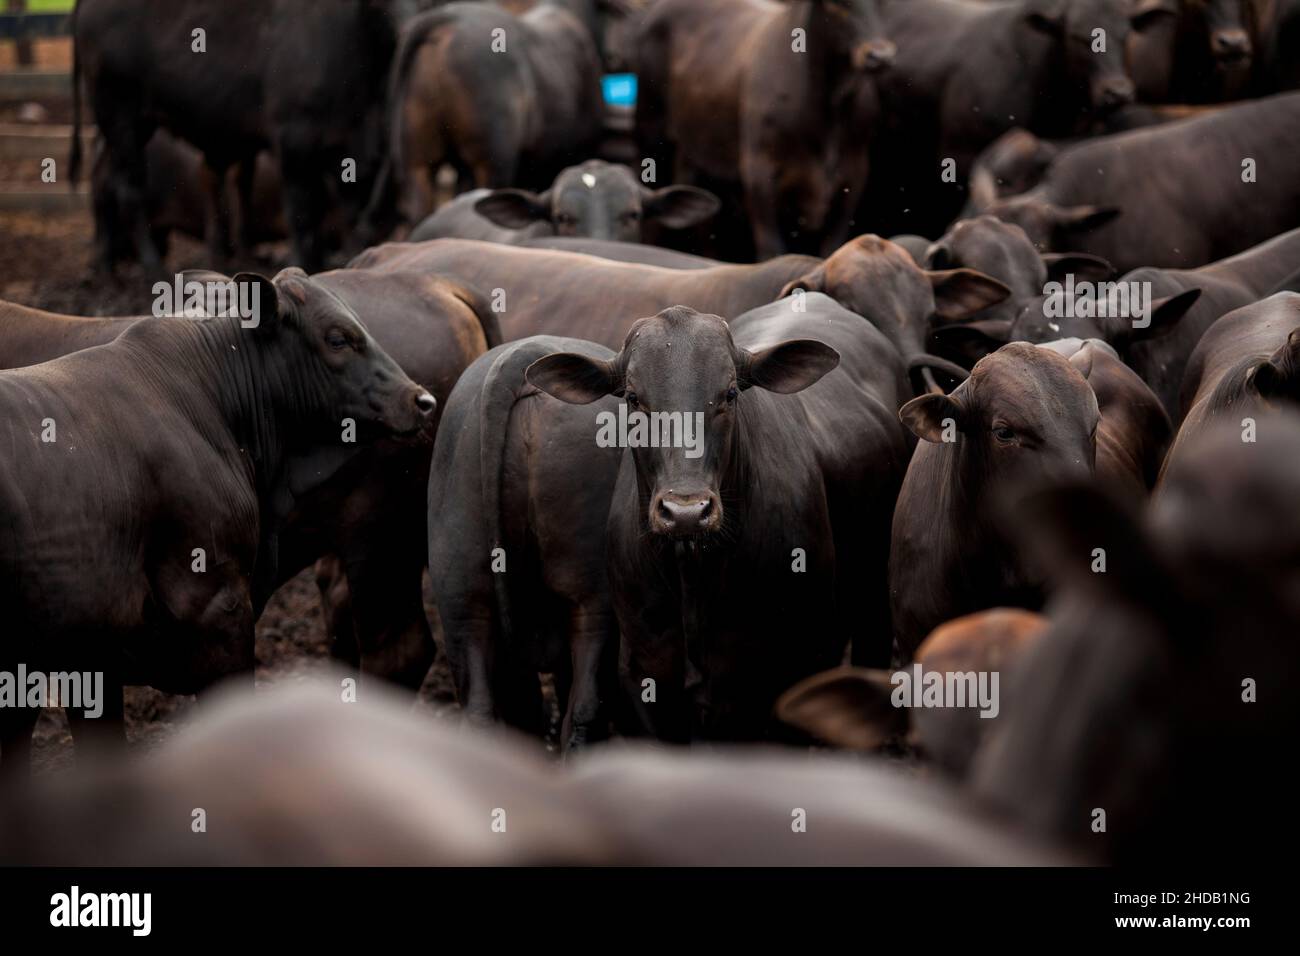 The million dollar cow: high-end farming in Brazil – photo essay